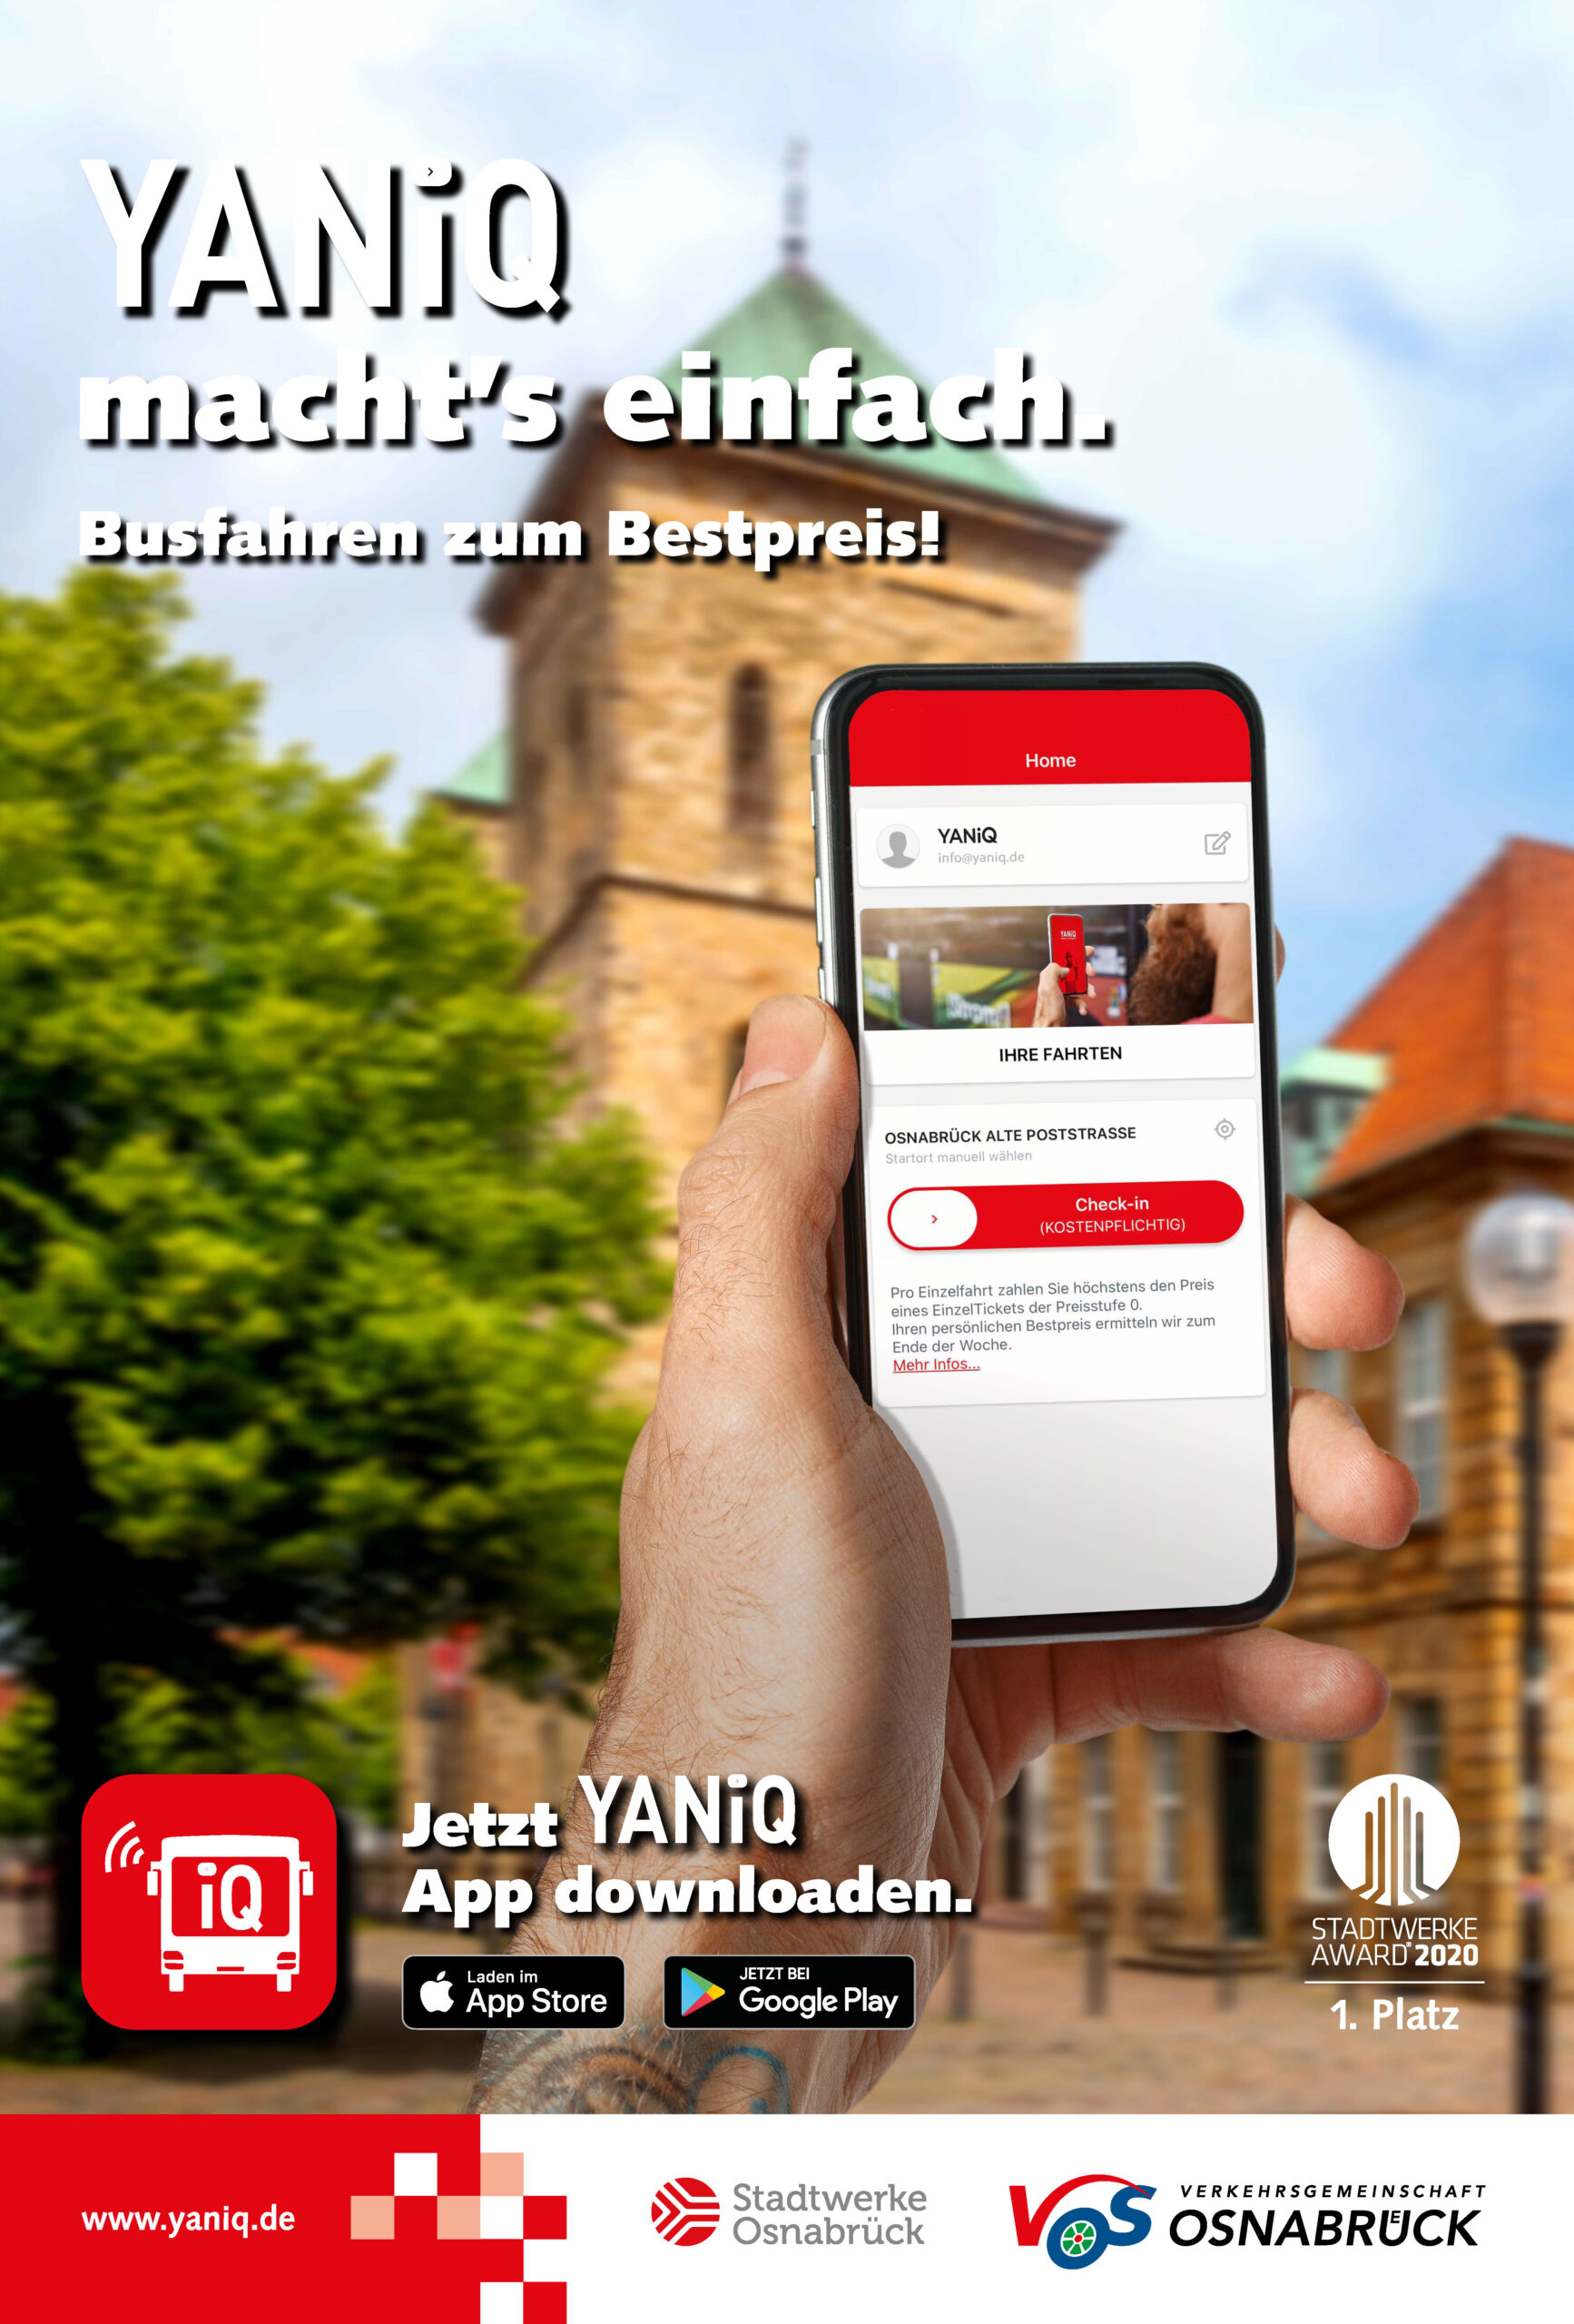 Osnabrück_YANIQ_CITYLIGHT_Smartphone_StadtwerkeOsnabrück2020